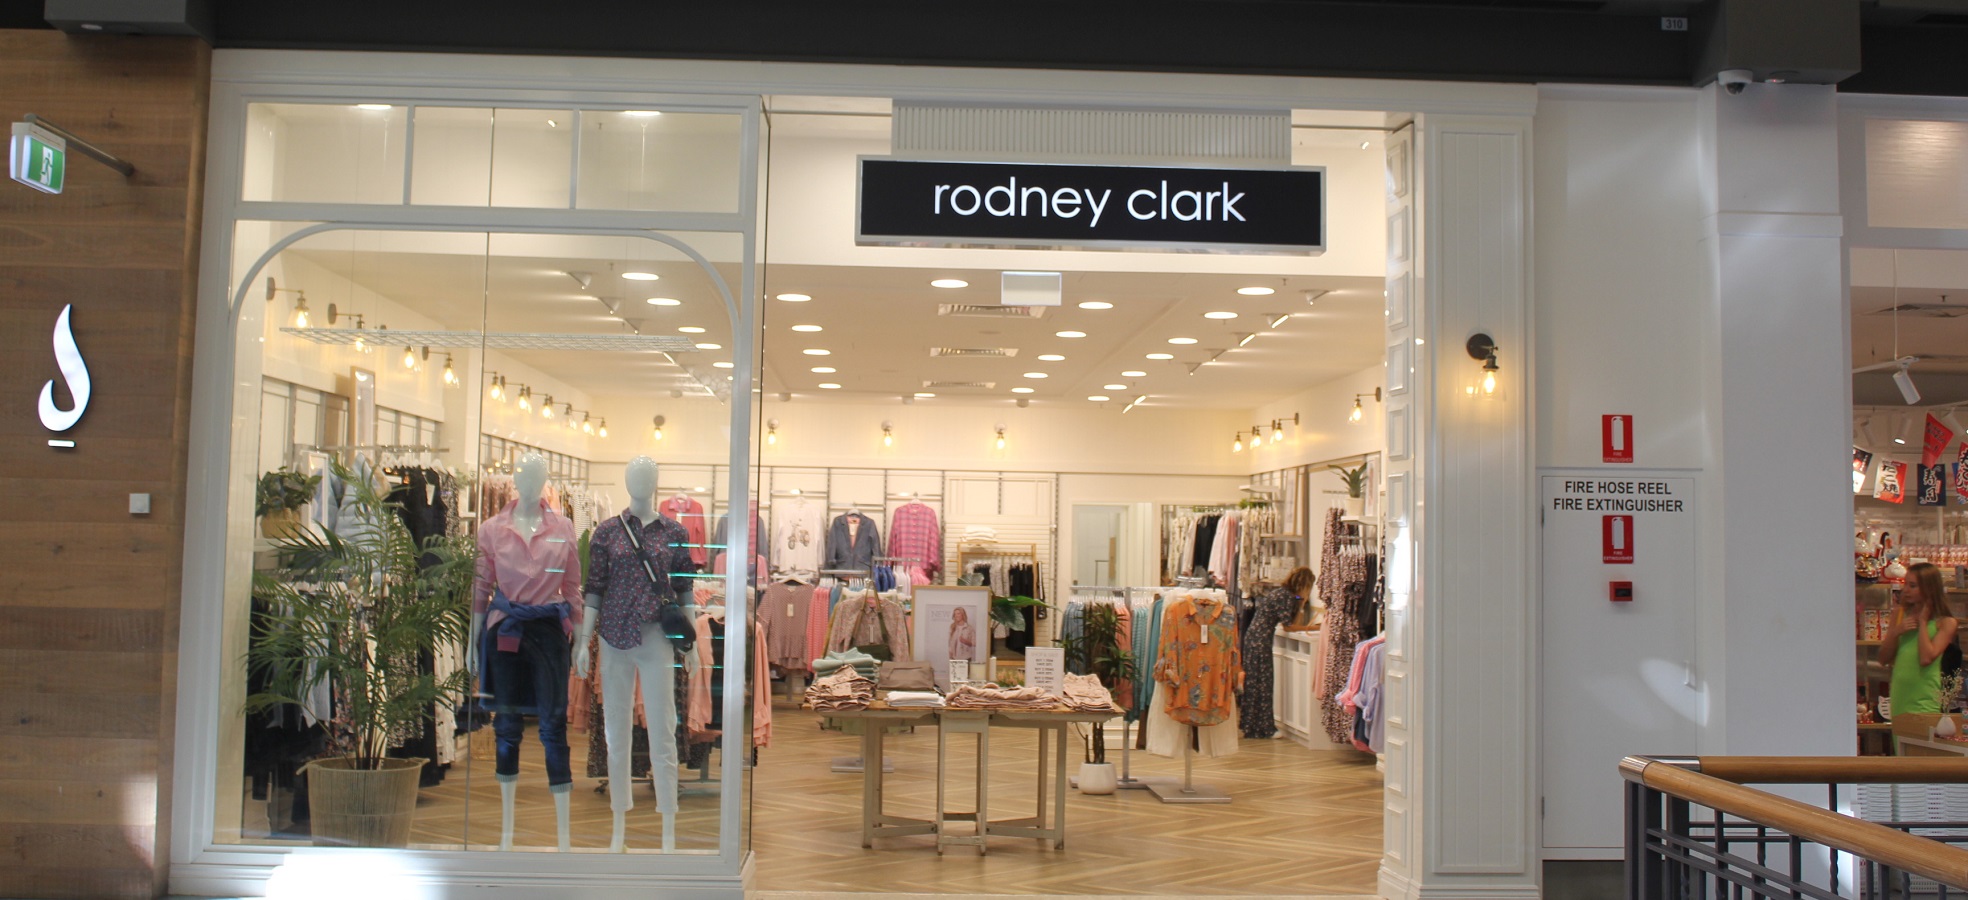 Rodney Clark store front photo (resized).jpg